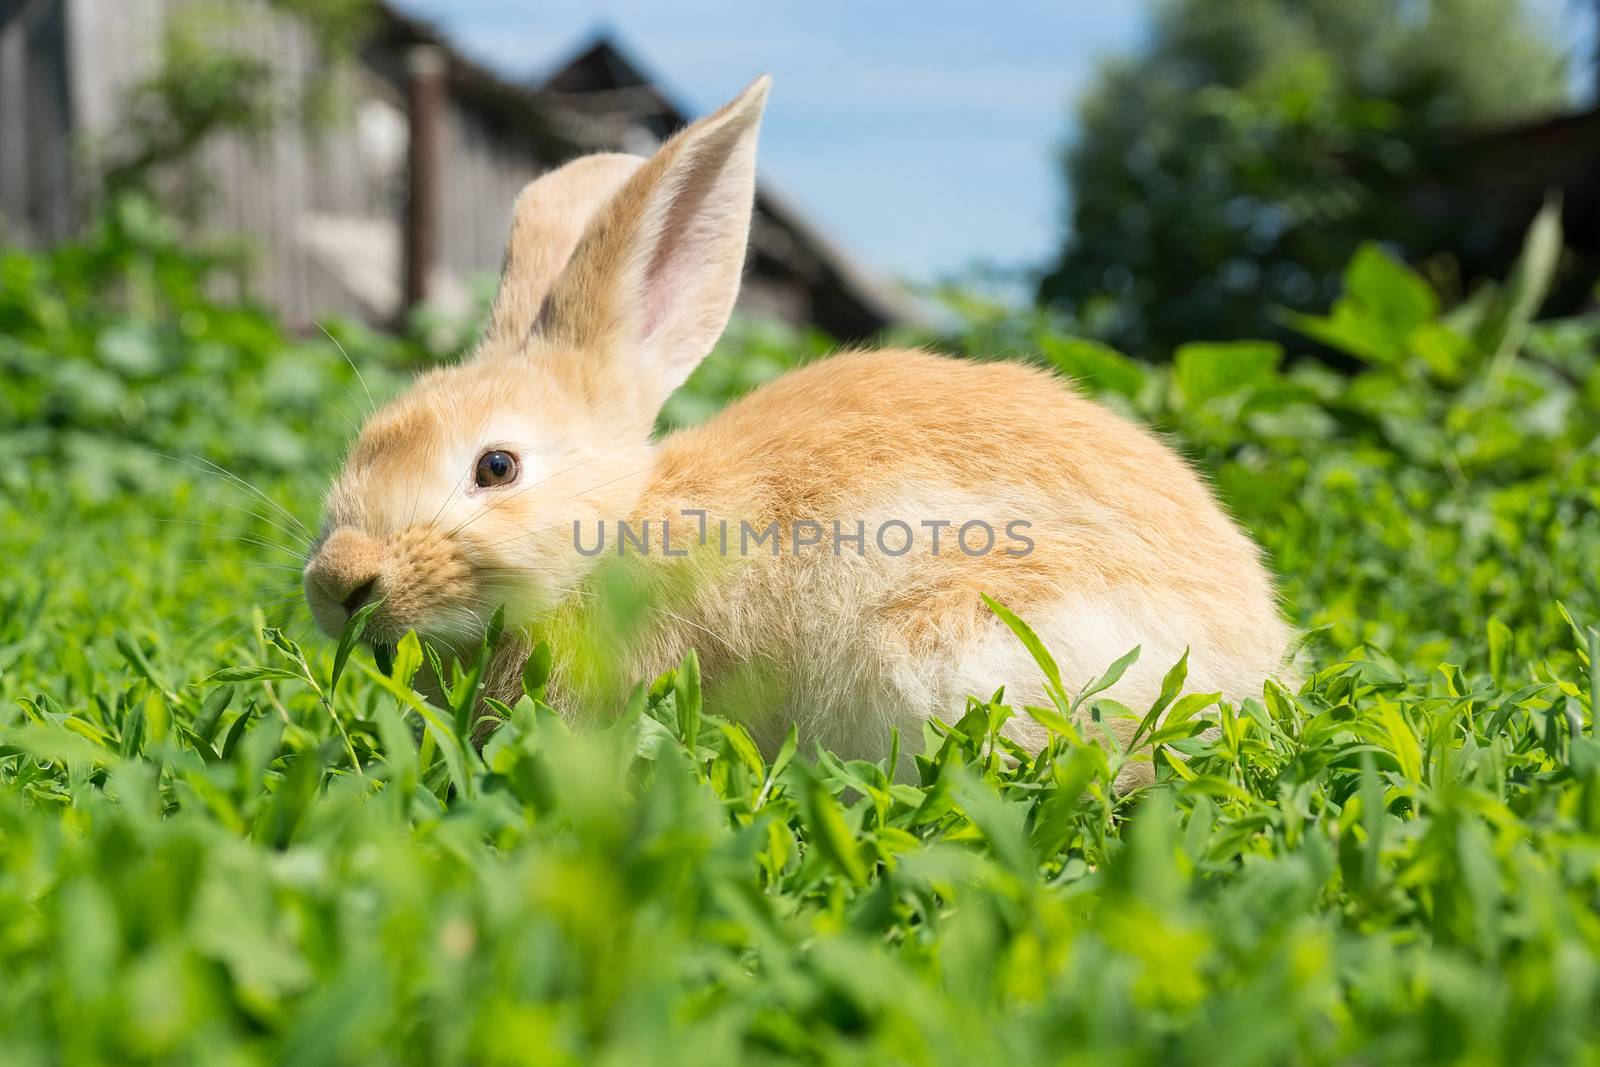 Rabbit on the grass, Russia, village, summer